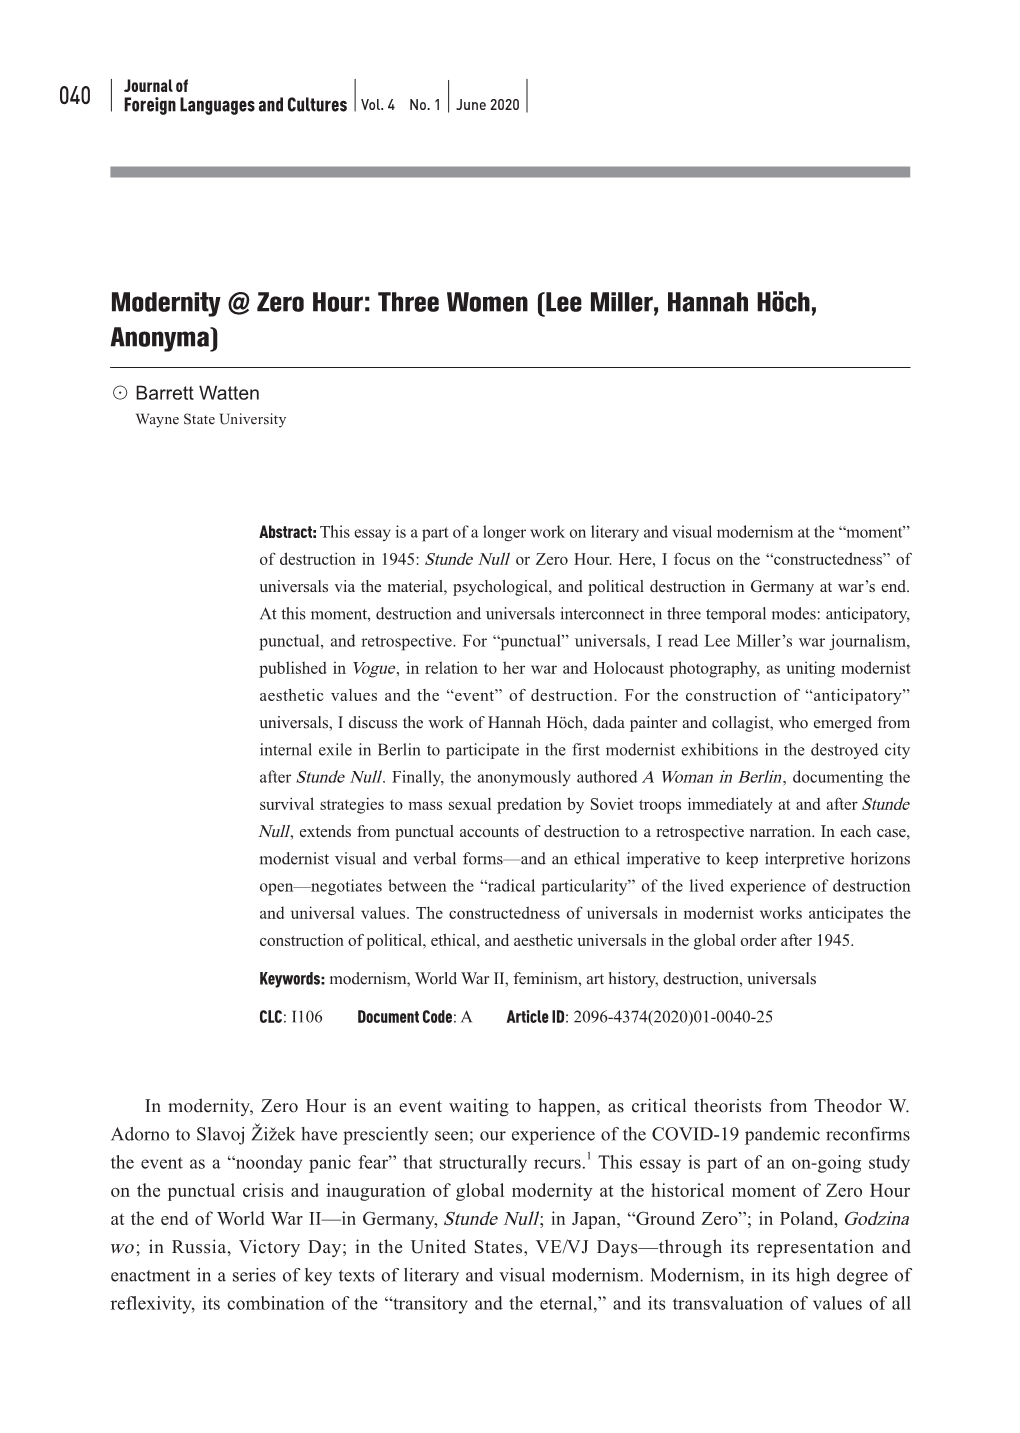 Modernity @ Zero Hour: Three Women (Lee Miller, Hannah Höch, Anonyma)